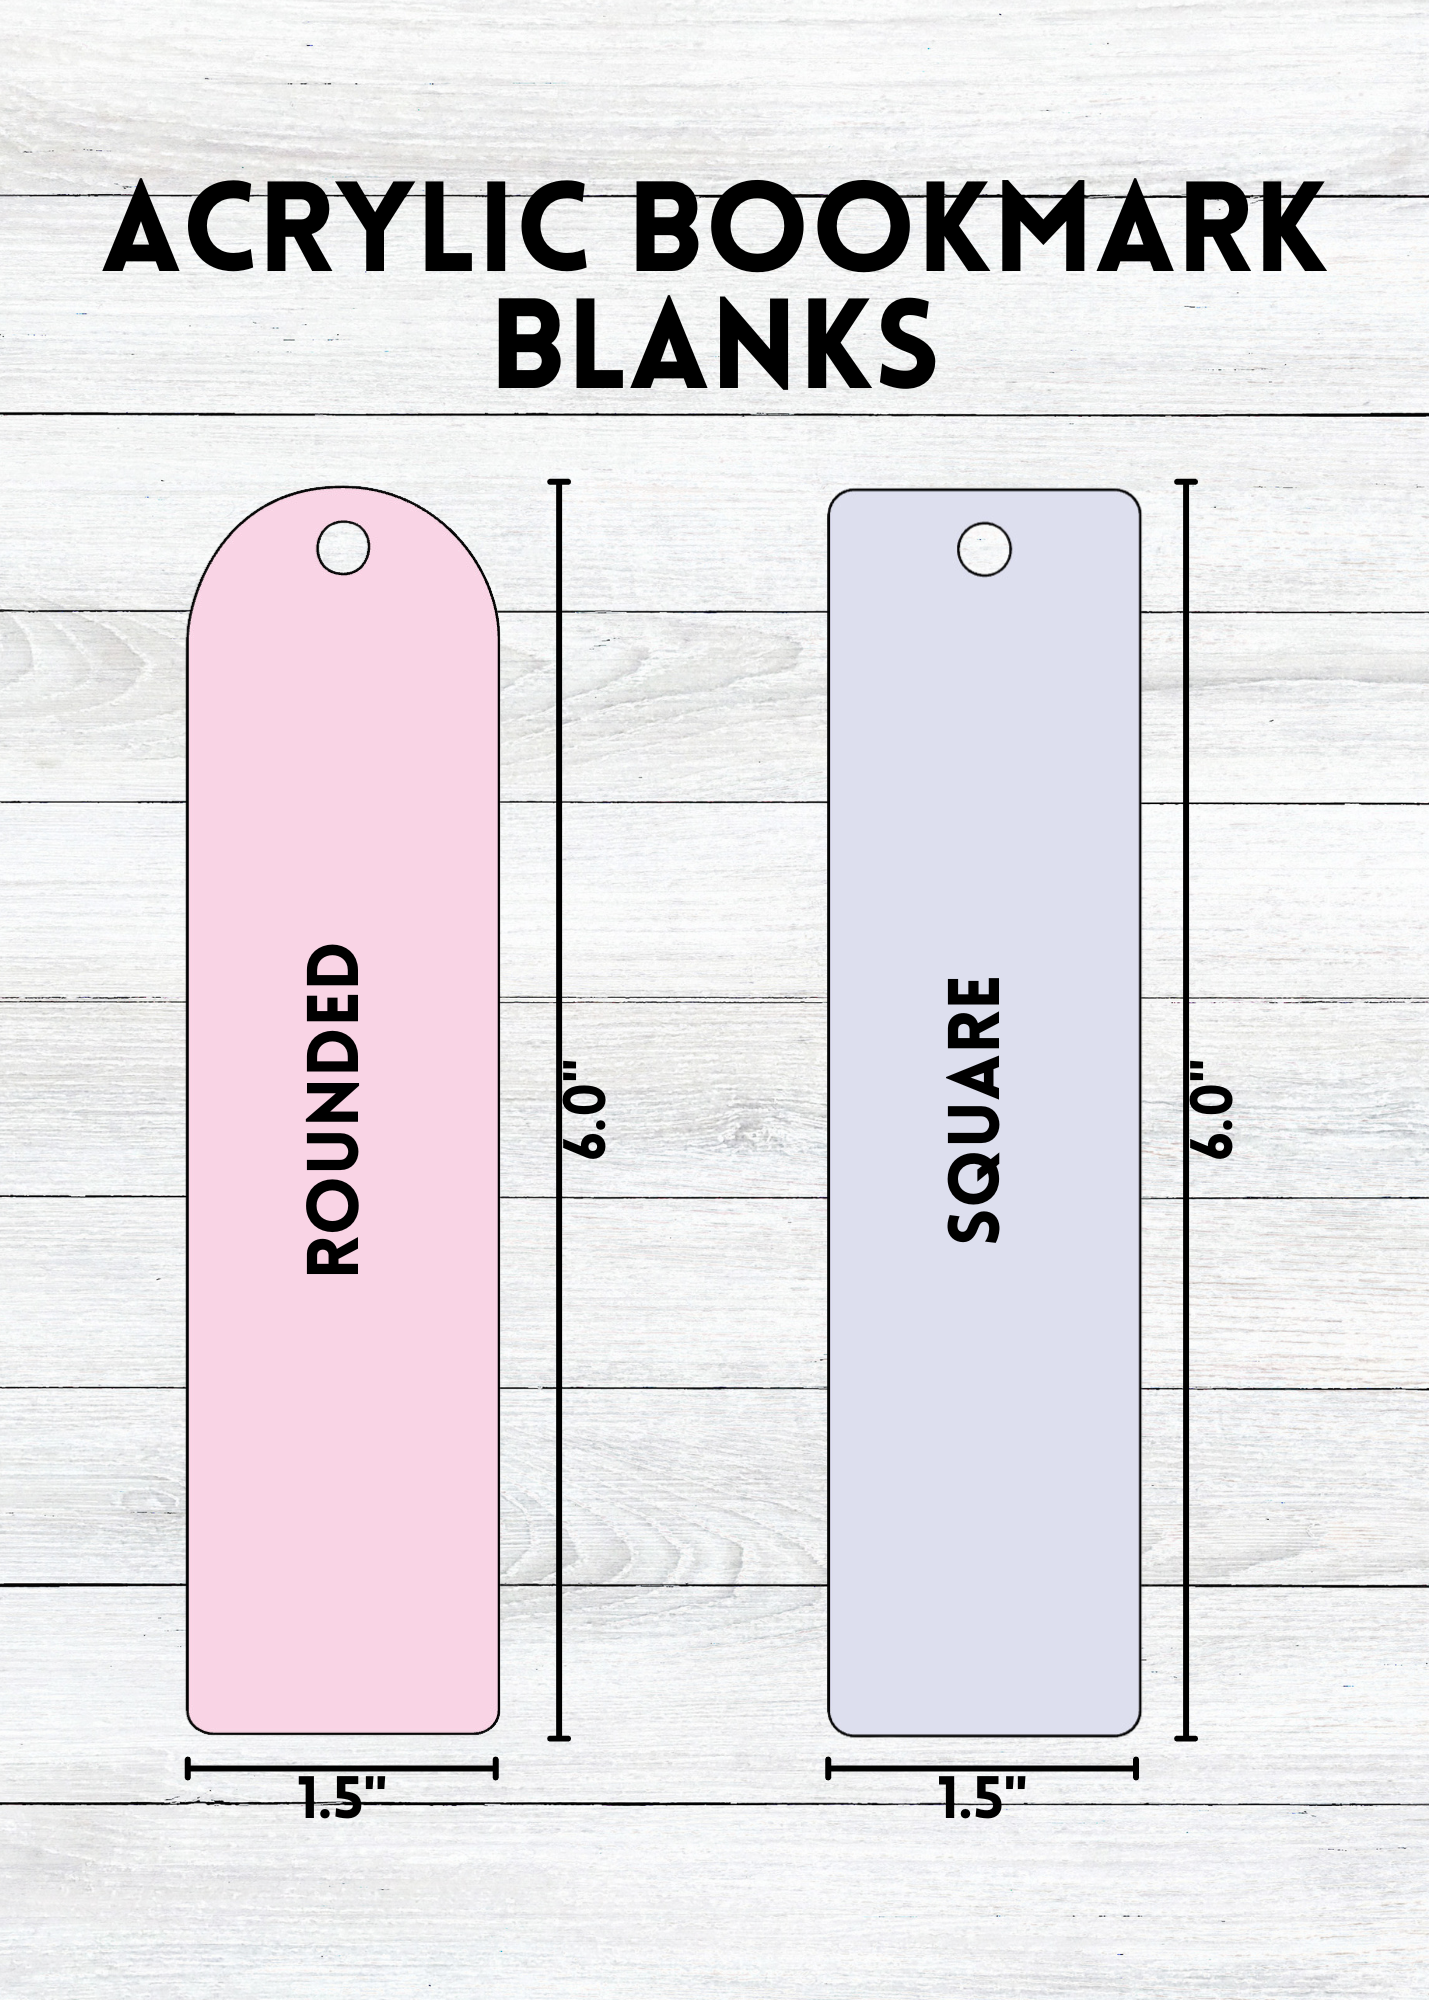 1/8” Acrylic Bookmark Blanks